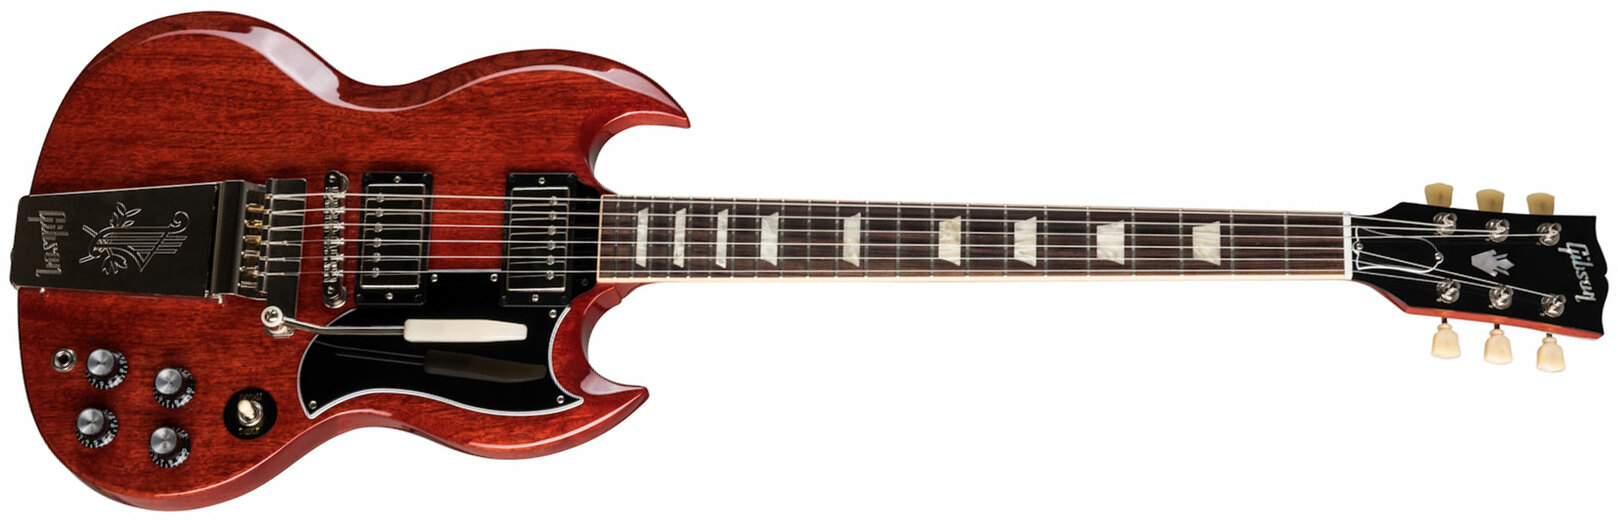 Gibson Sg Standard '61 Maestro Vibrola Original 2h Trem Rw - Retro-rock elektrische gitaar - Main picture